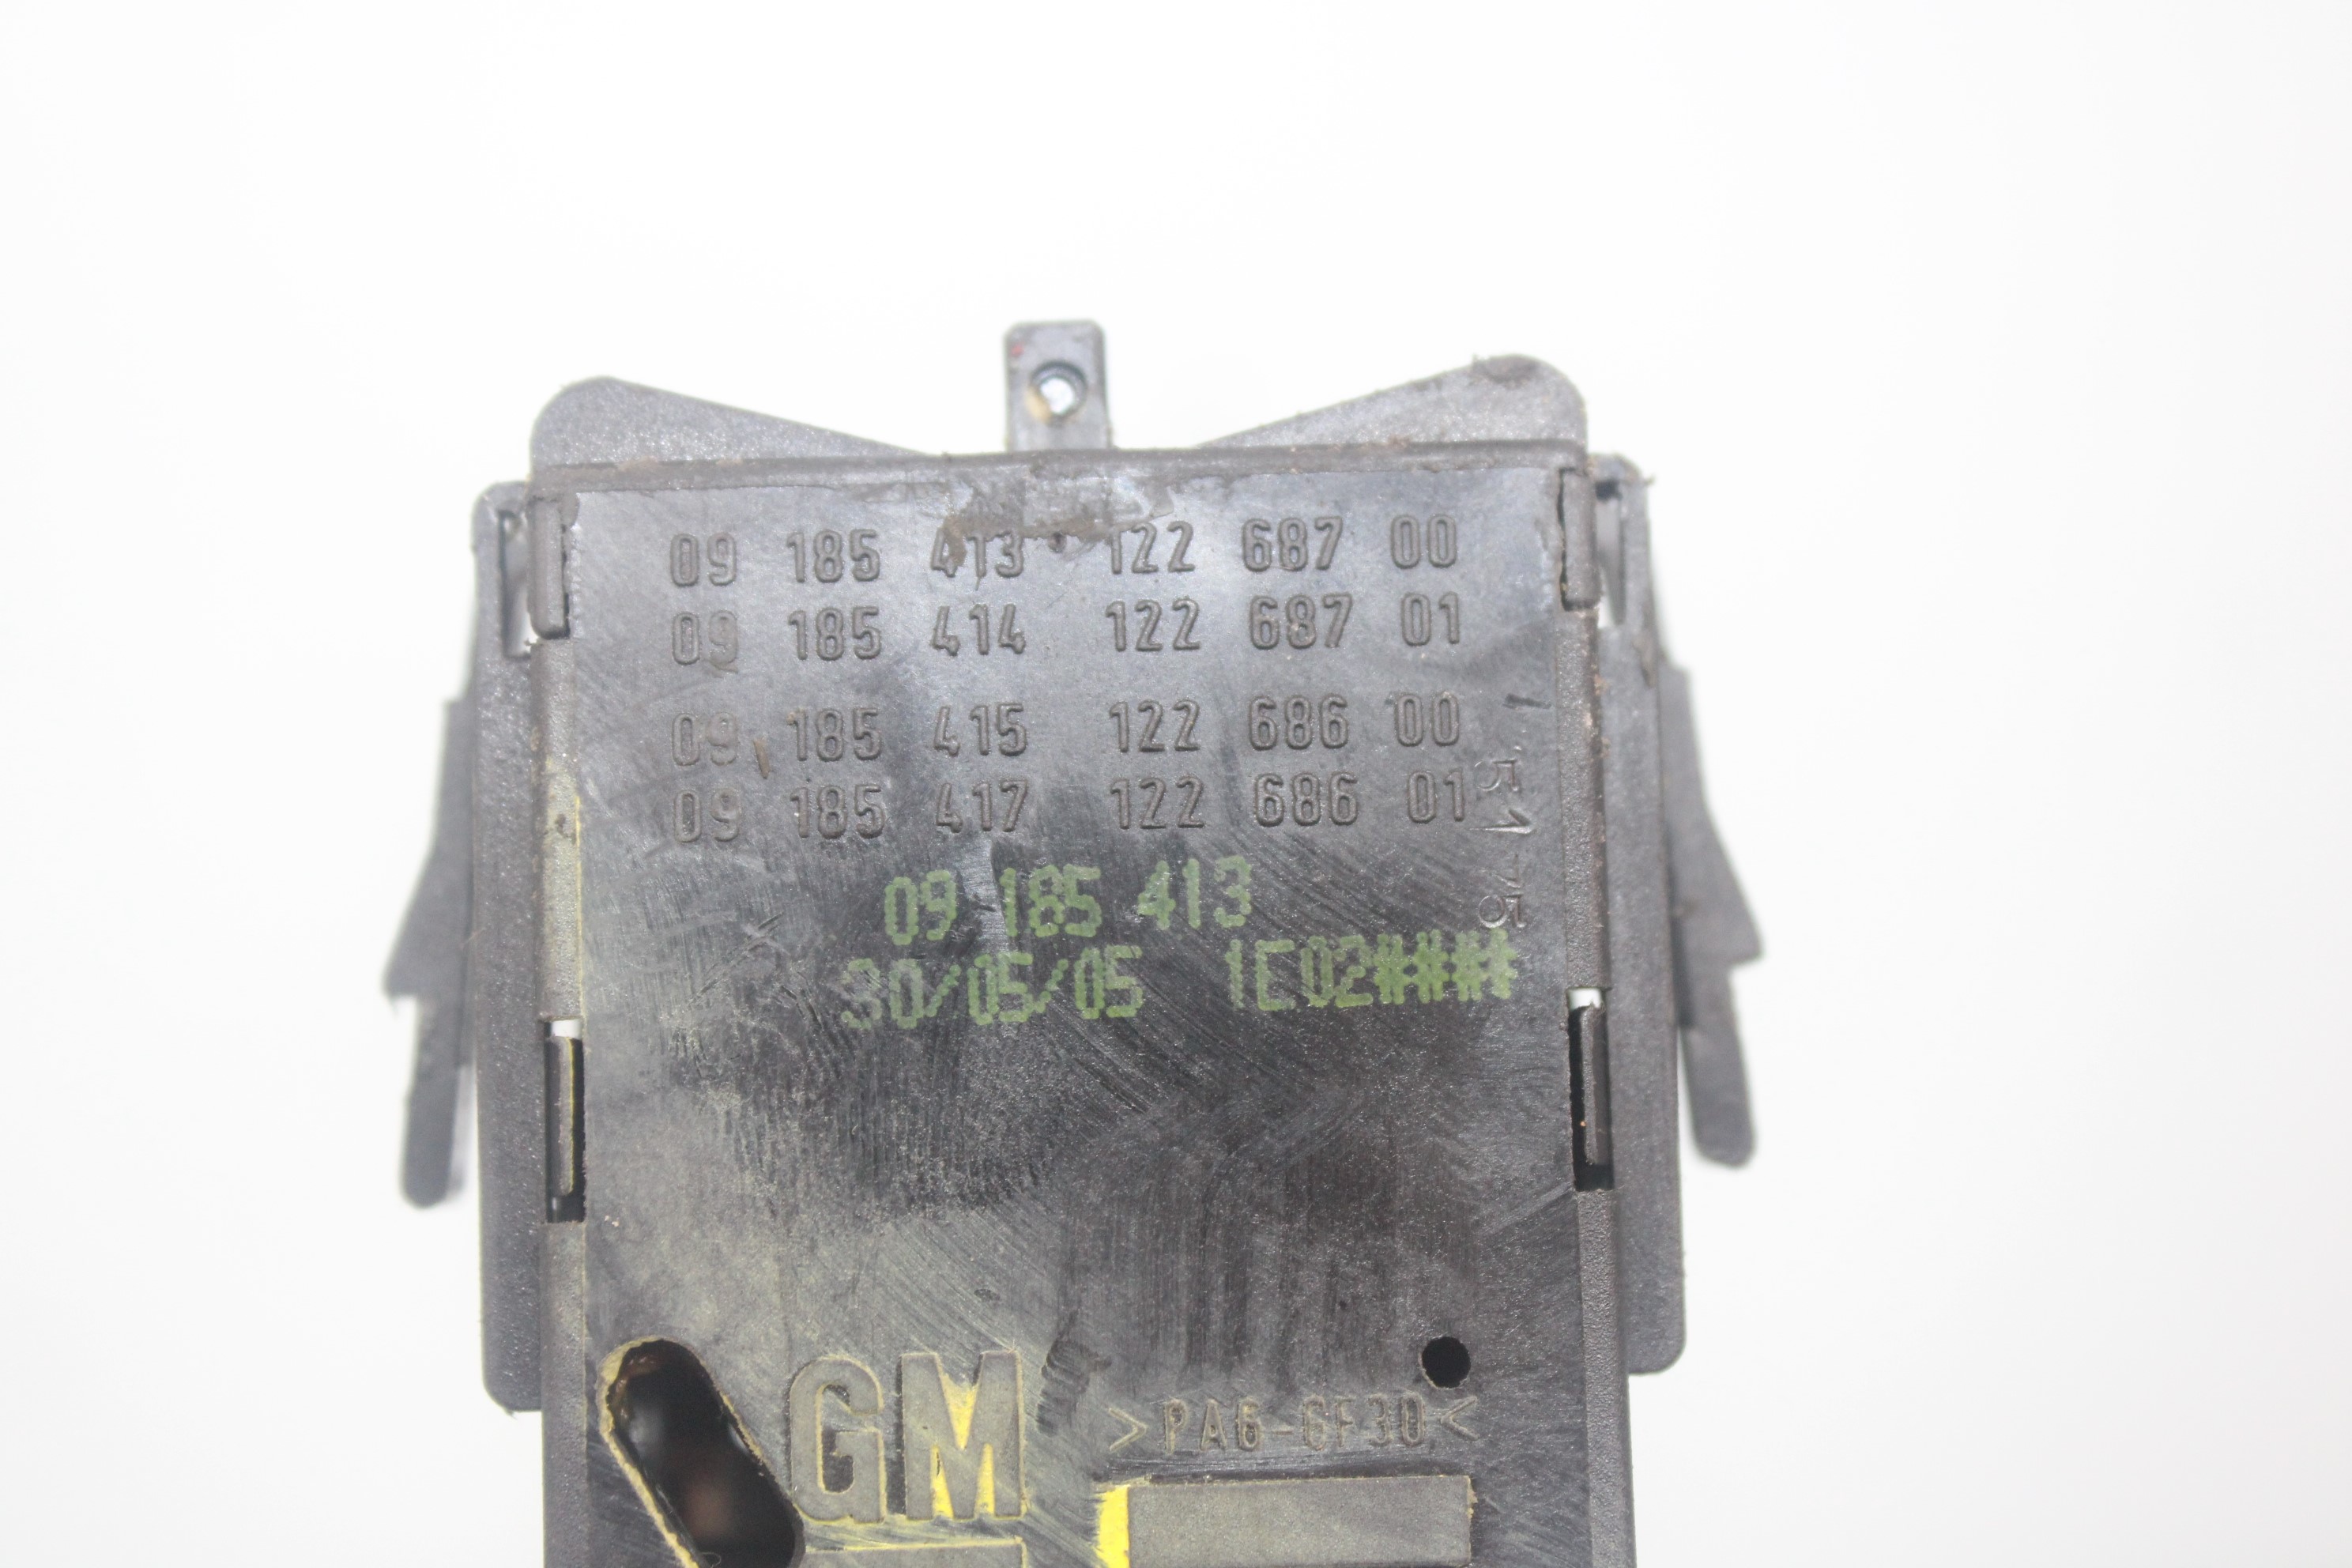 OPEL Corsa C (2000-2006) Turn switch knob 09185413 25181728